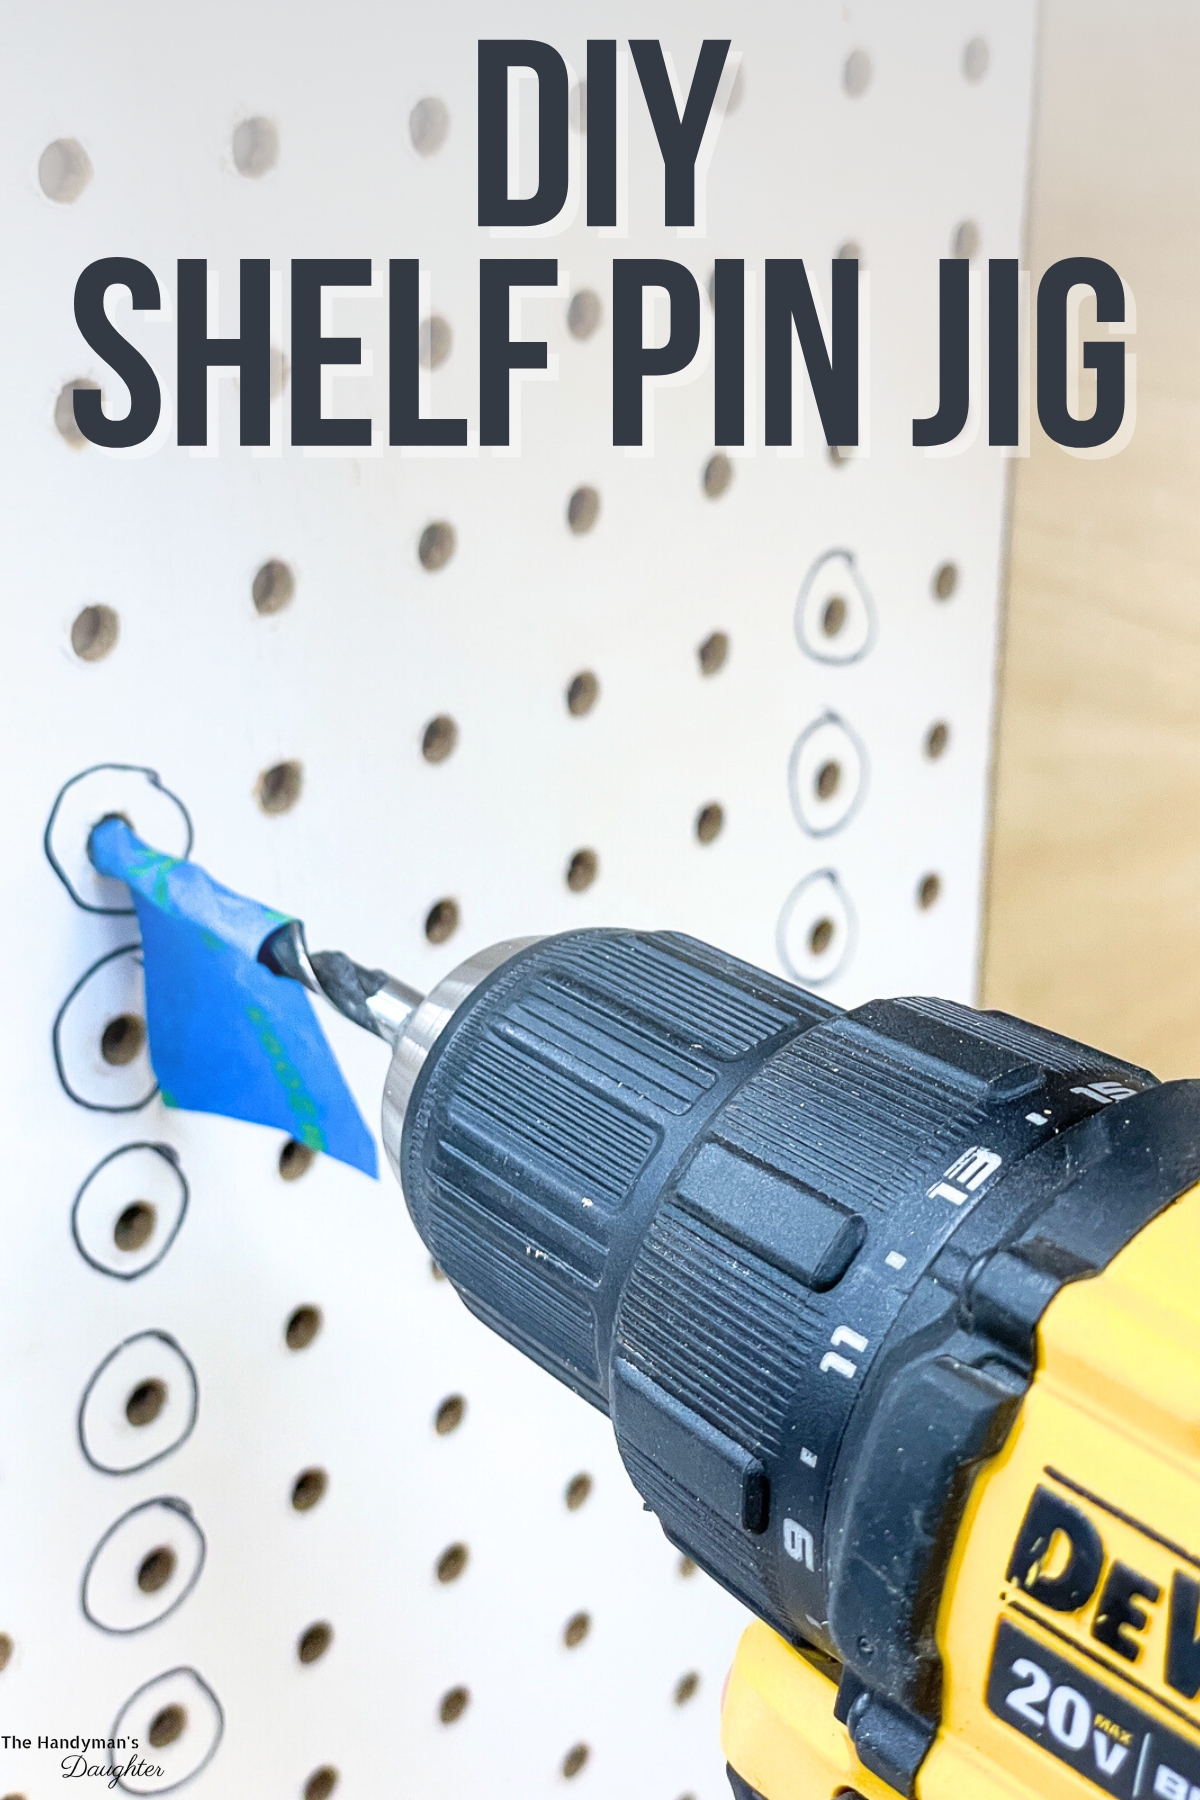 DIY shelf pin jig